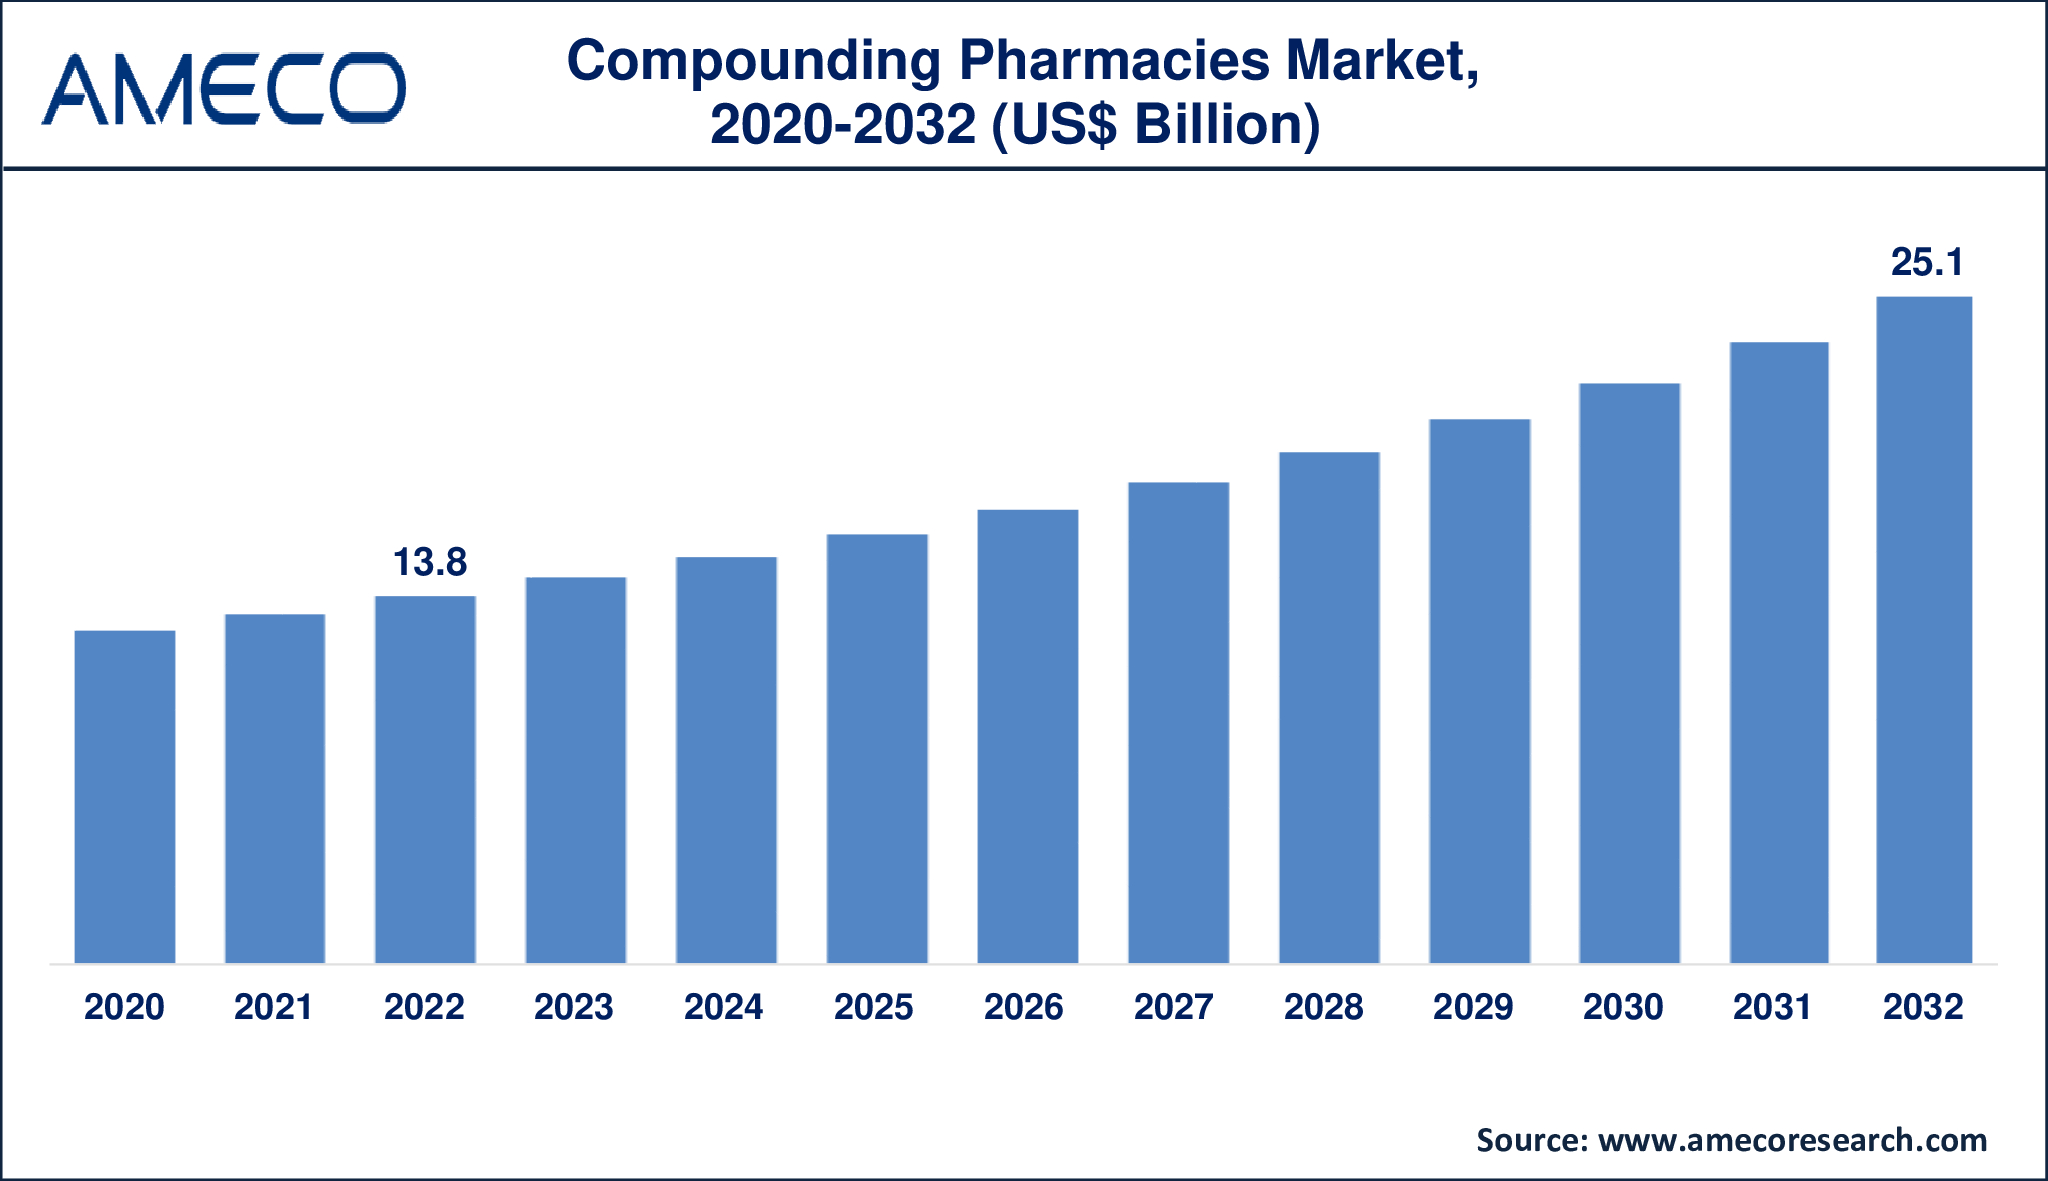 Compounding Pharmacies Market Dynamics